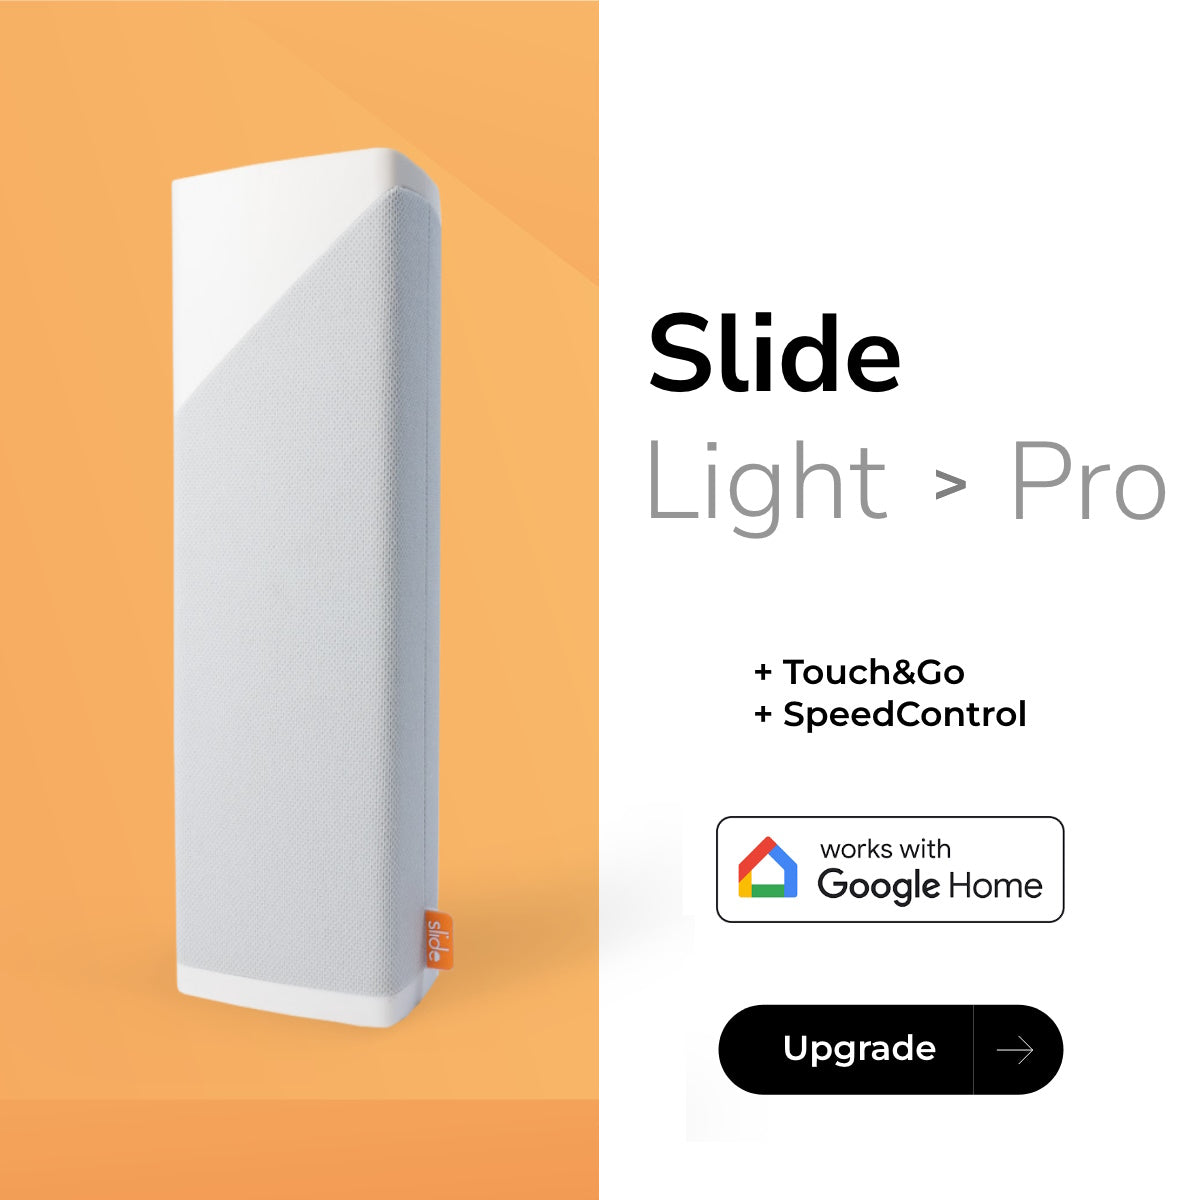 Slide upgrade (Light > Pro)